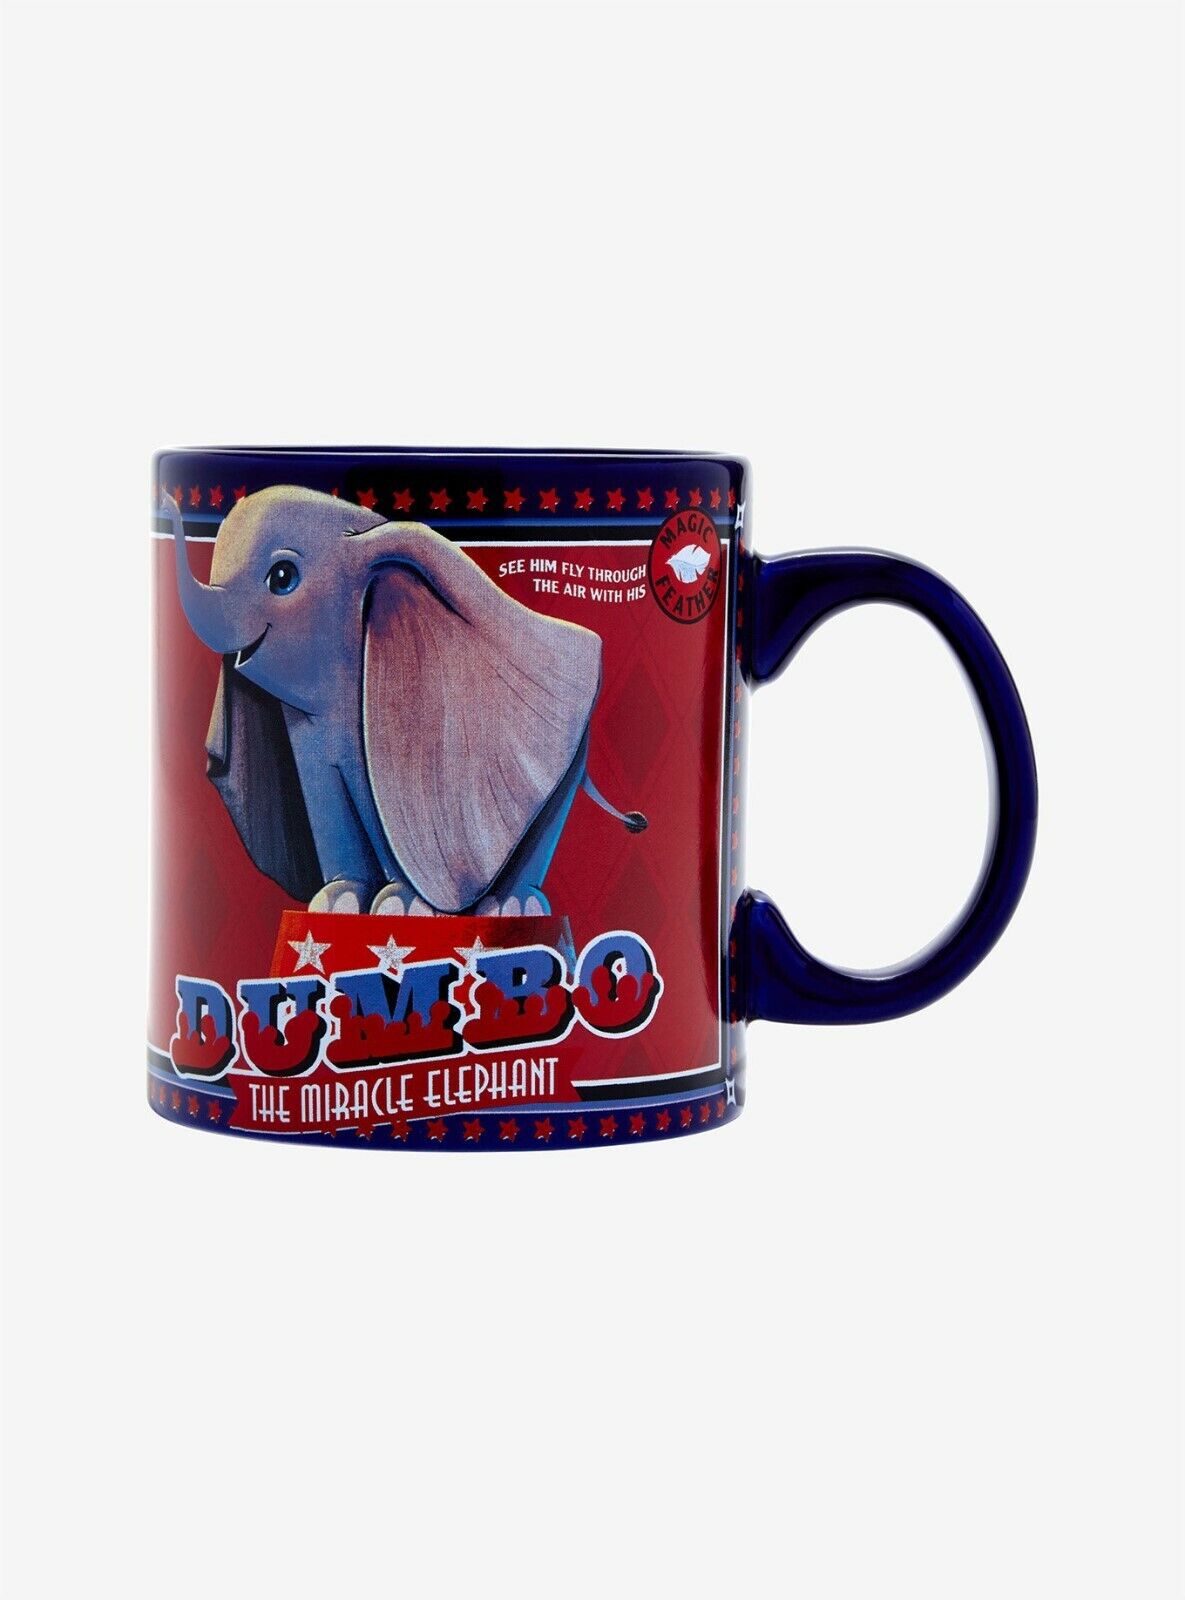 DISNEY LIVE ACTION MOVIE DUMBO CIRCUS ELEPHANT CERAMIC ART COFFEE MUG CUP NWT